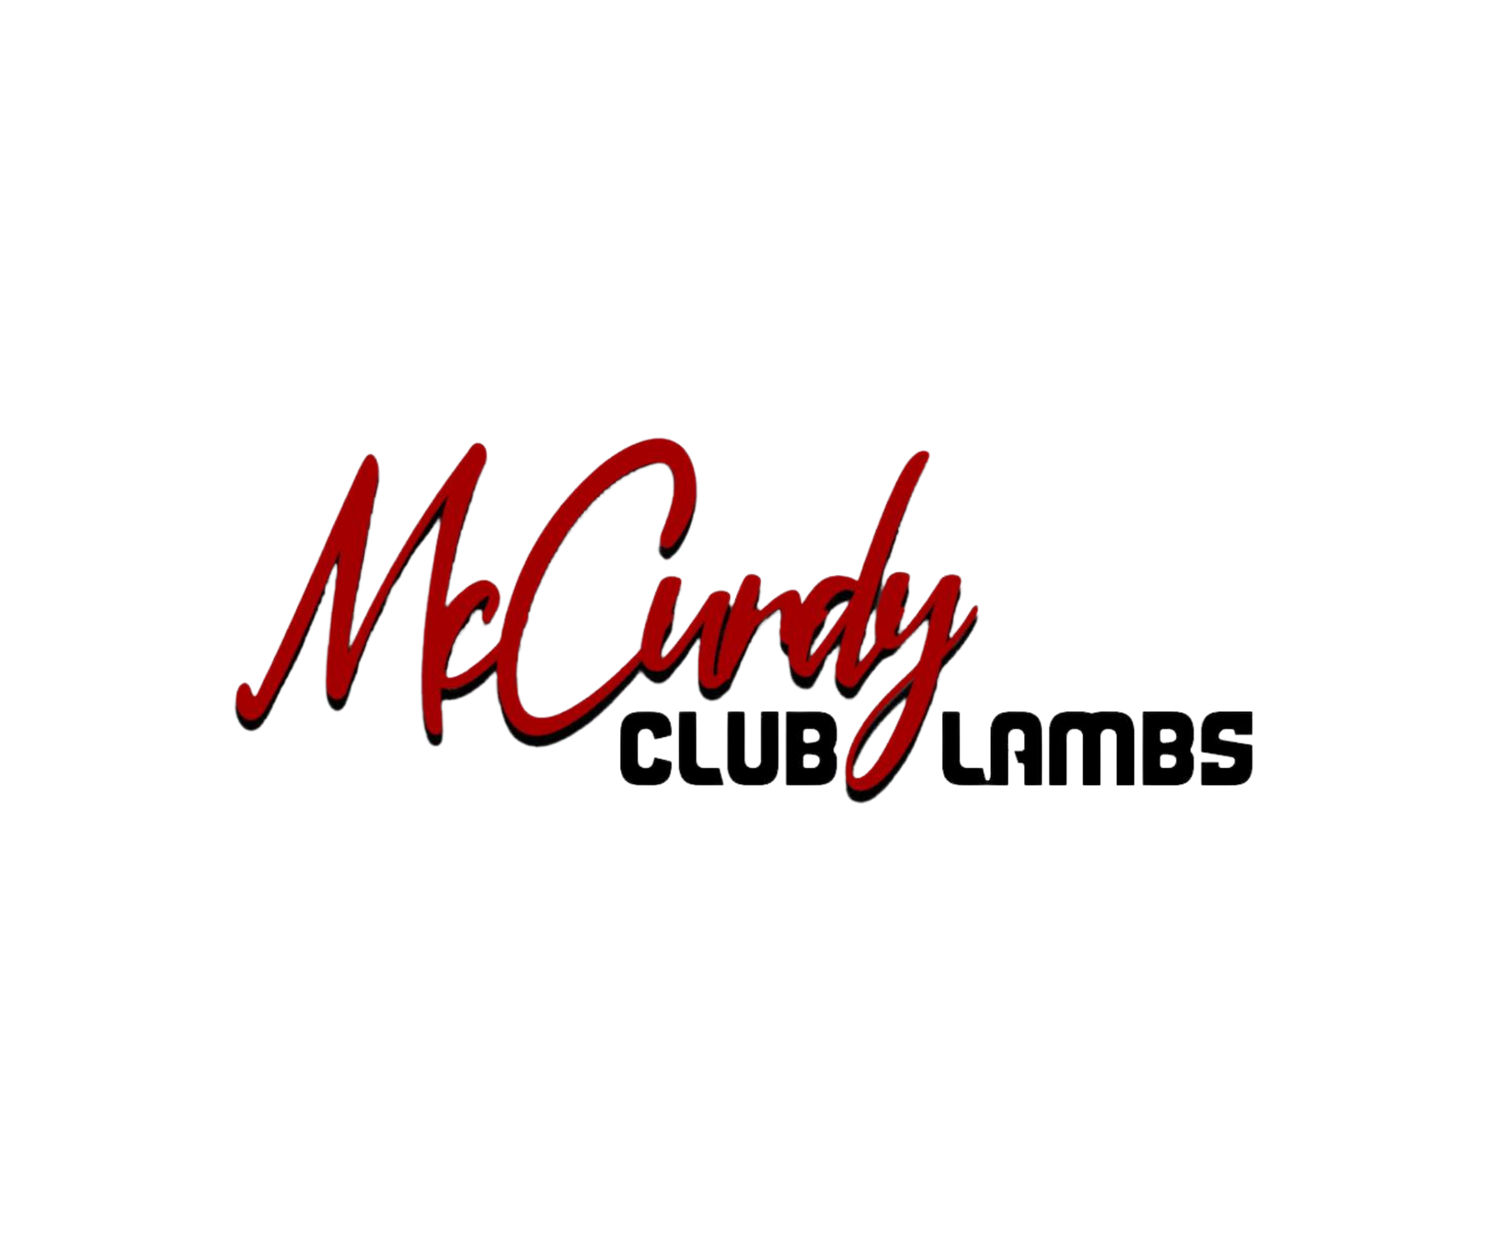 McCurdy Club Lambs PRE-ORDER Apparel Store